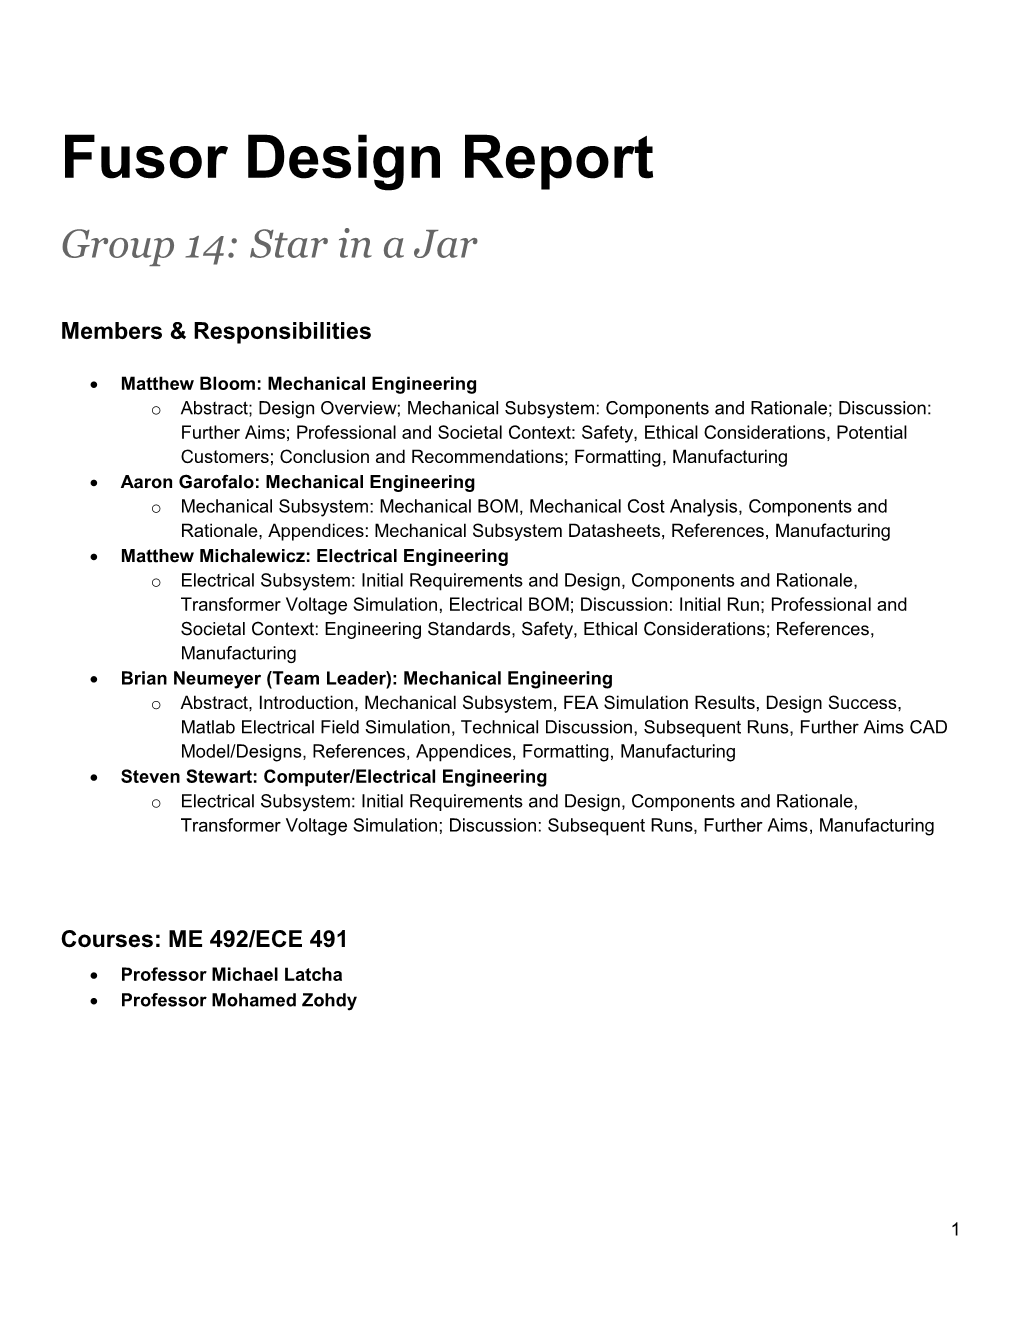 Fusor Design Report Group 14: Star in a Jar